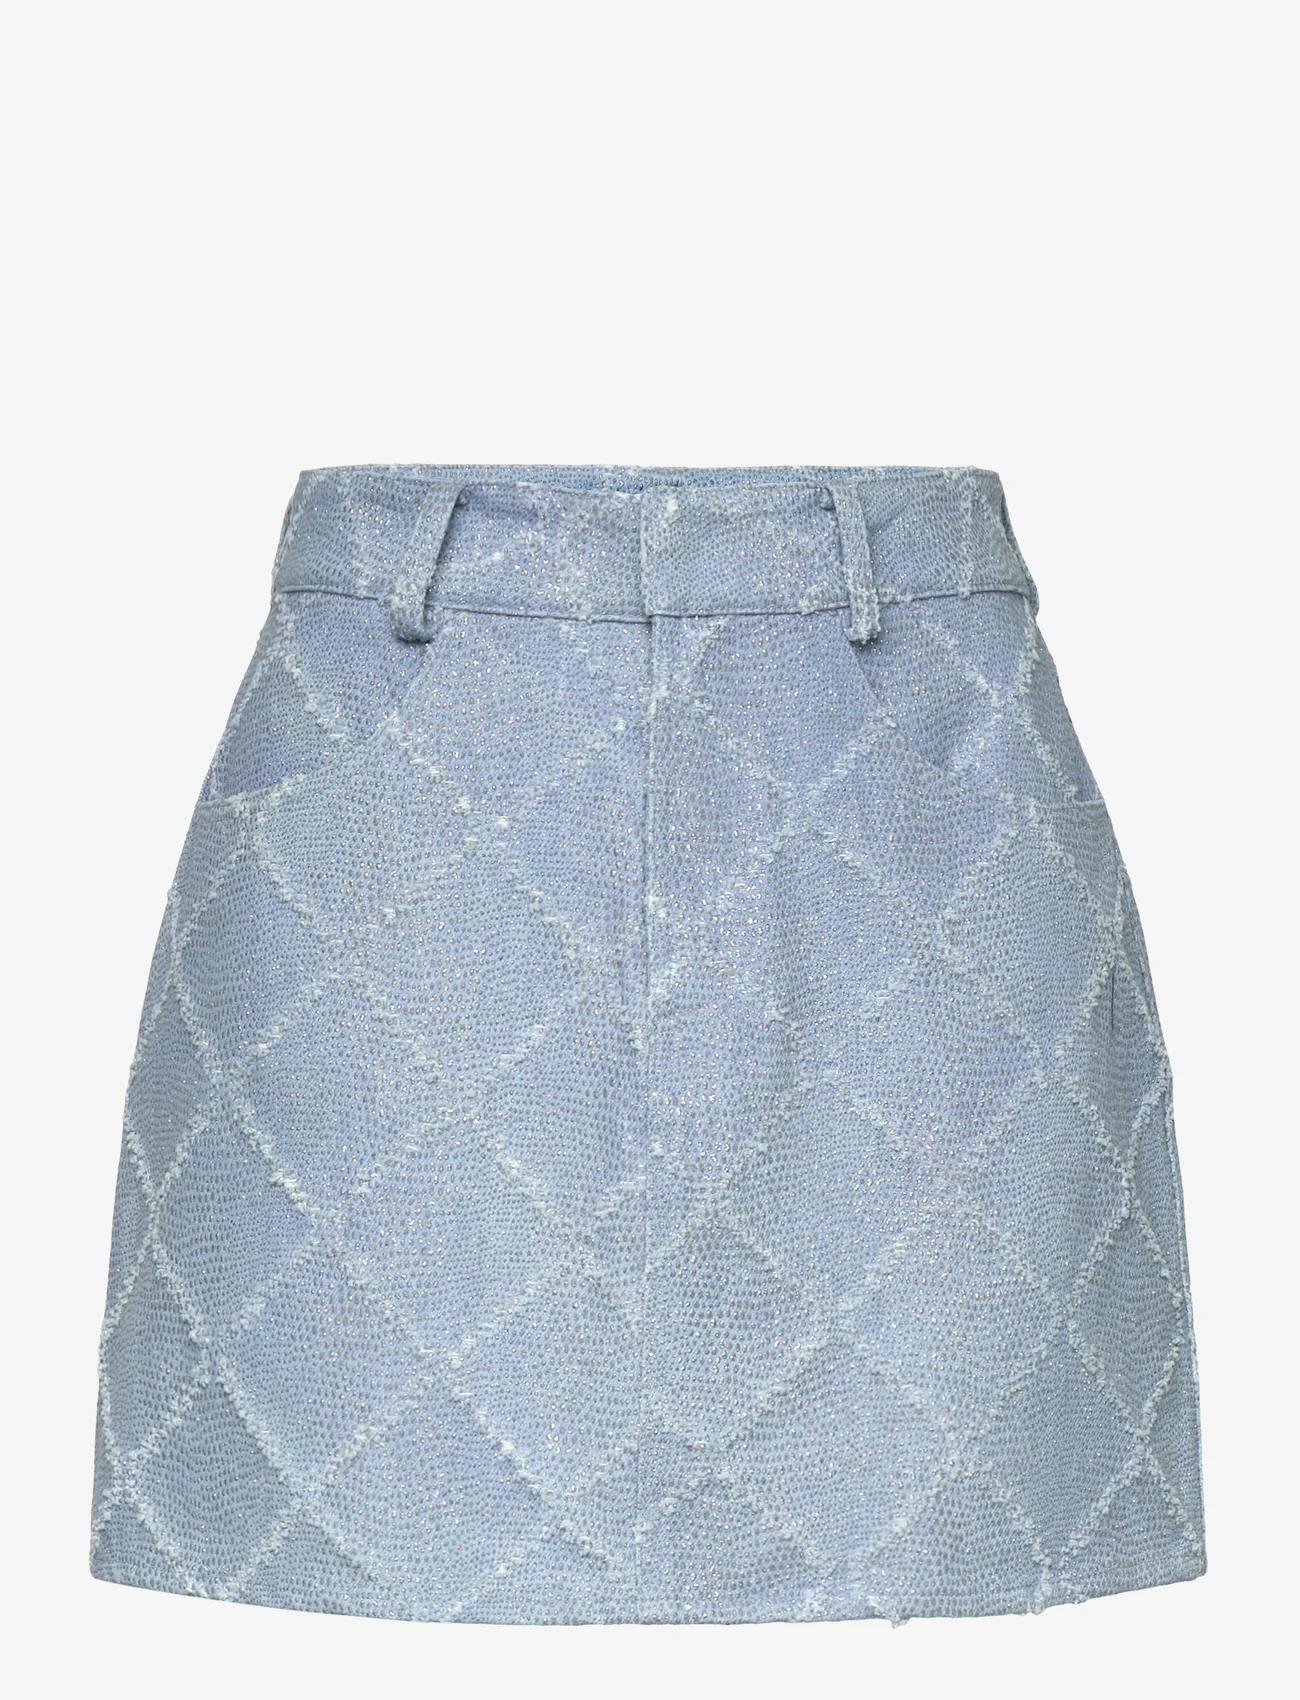 Cras - Northcras Skirt - short skirts - sparkle denim - 0